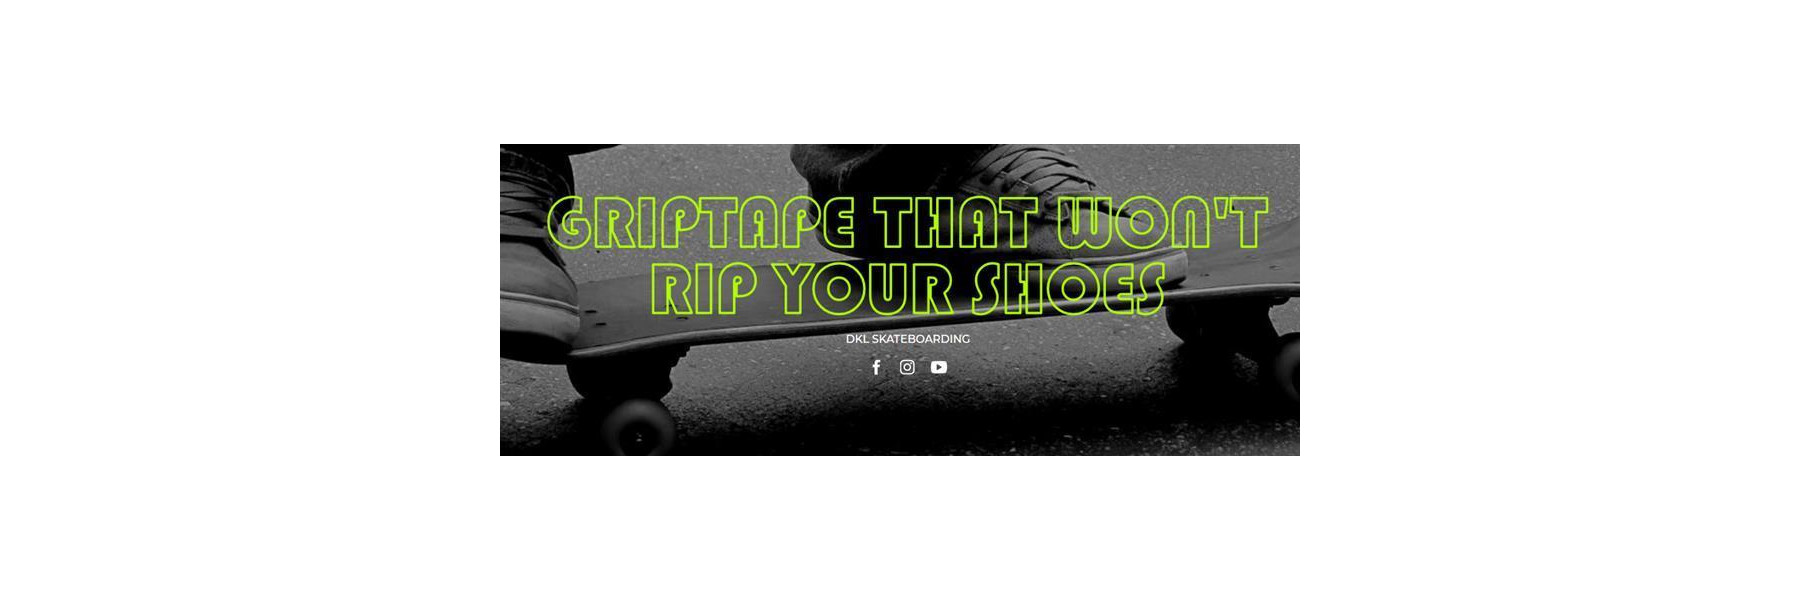 DKL Skateboarding: Griptape that won't rip your shoes